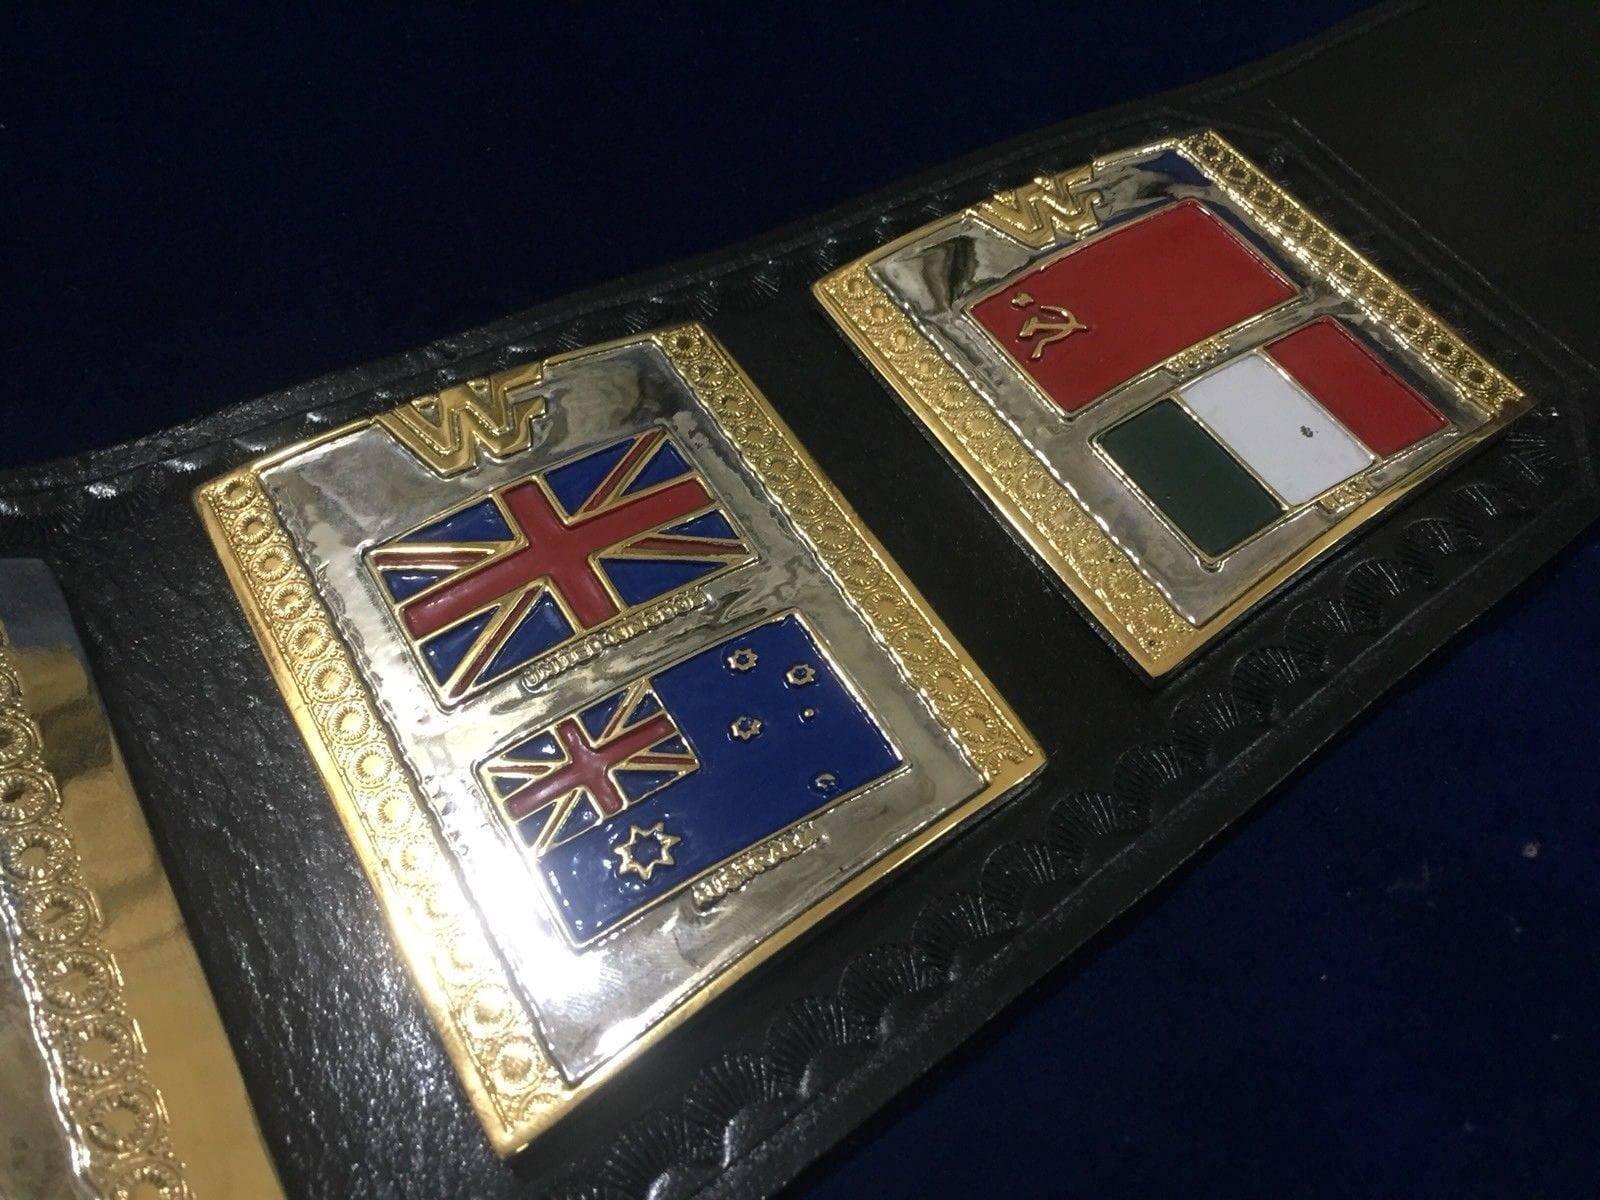 WWF HULK HOGAN 86 24K GOLD Championship Belt - Zees Belts